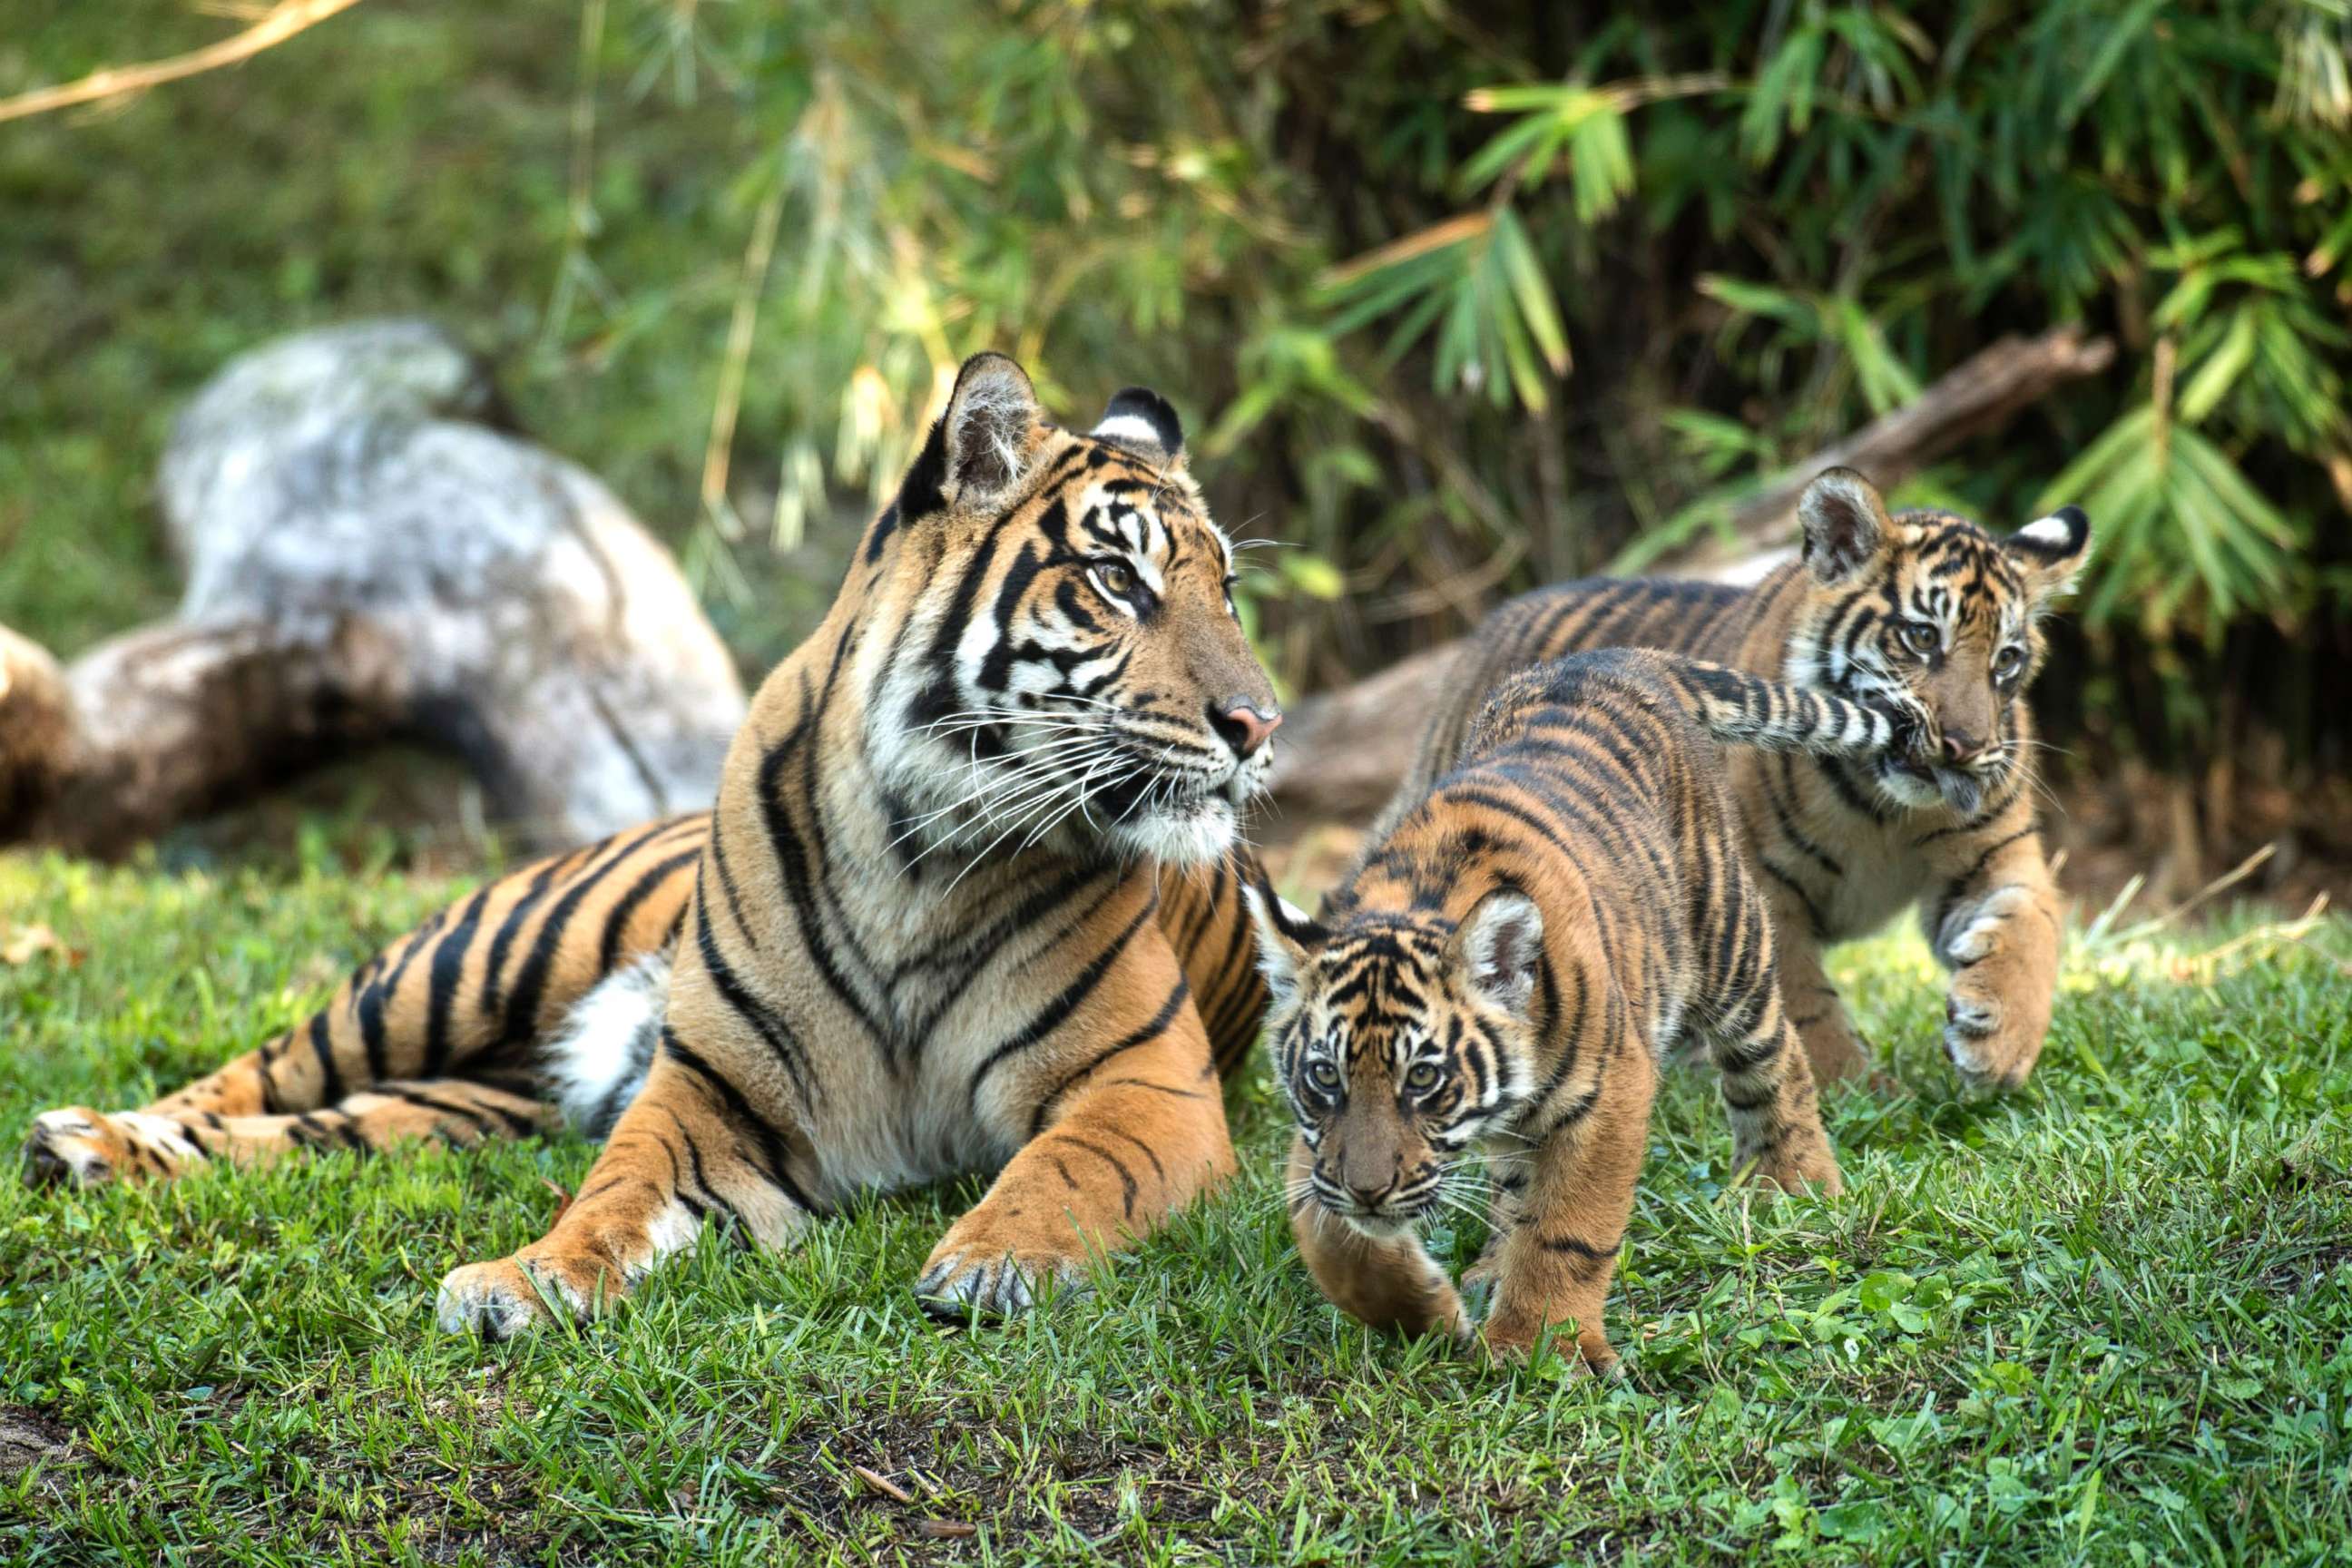 PHOTO: Jeda and Anala are the first tigers ever born at Walt Disney World's Animal Kingdom.